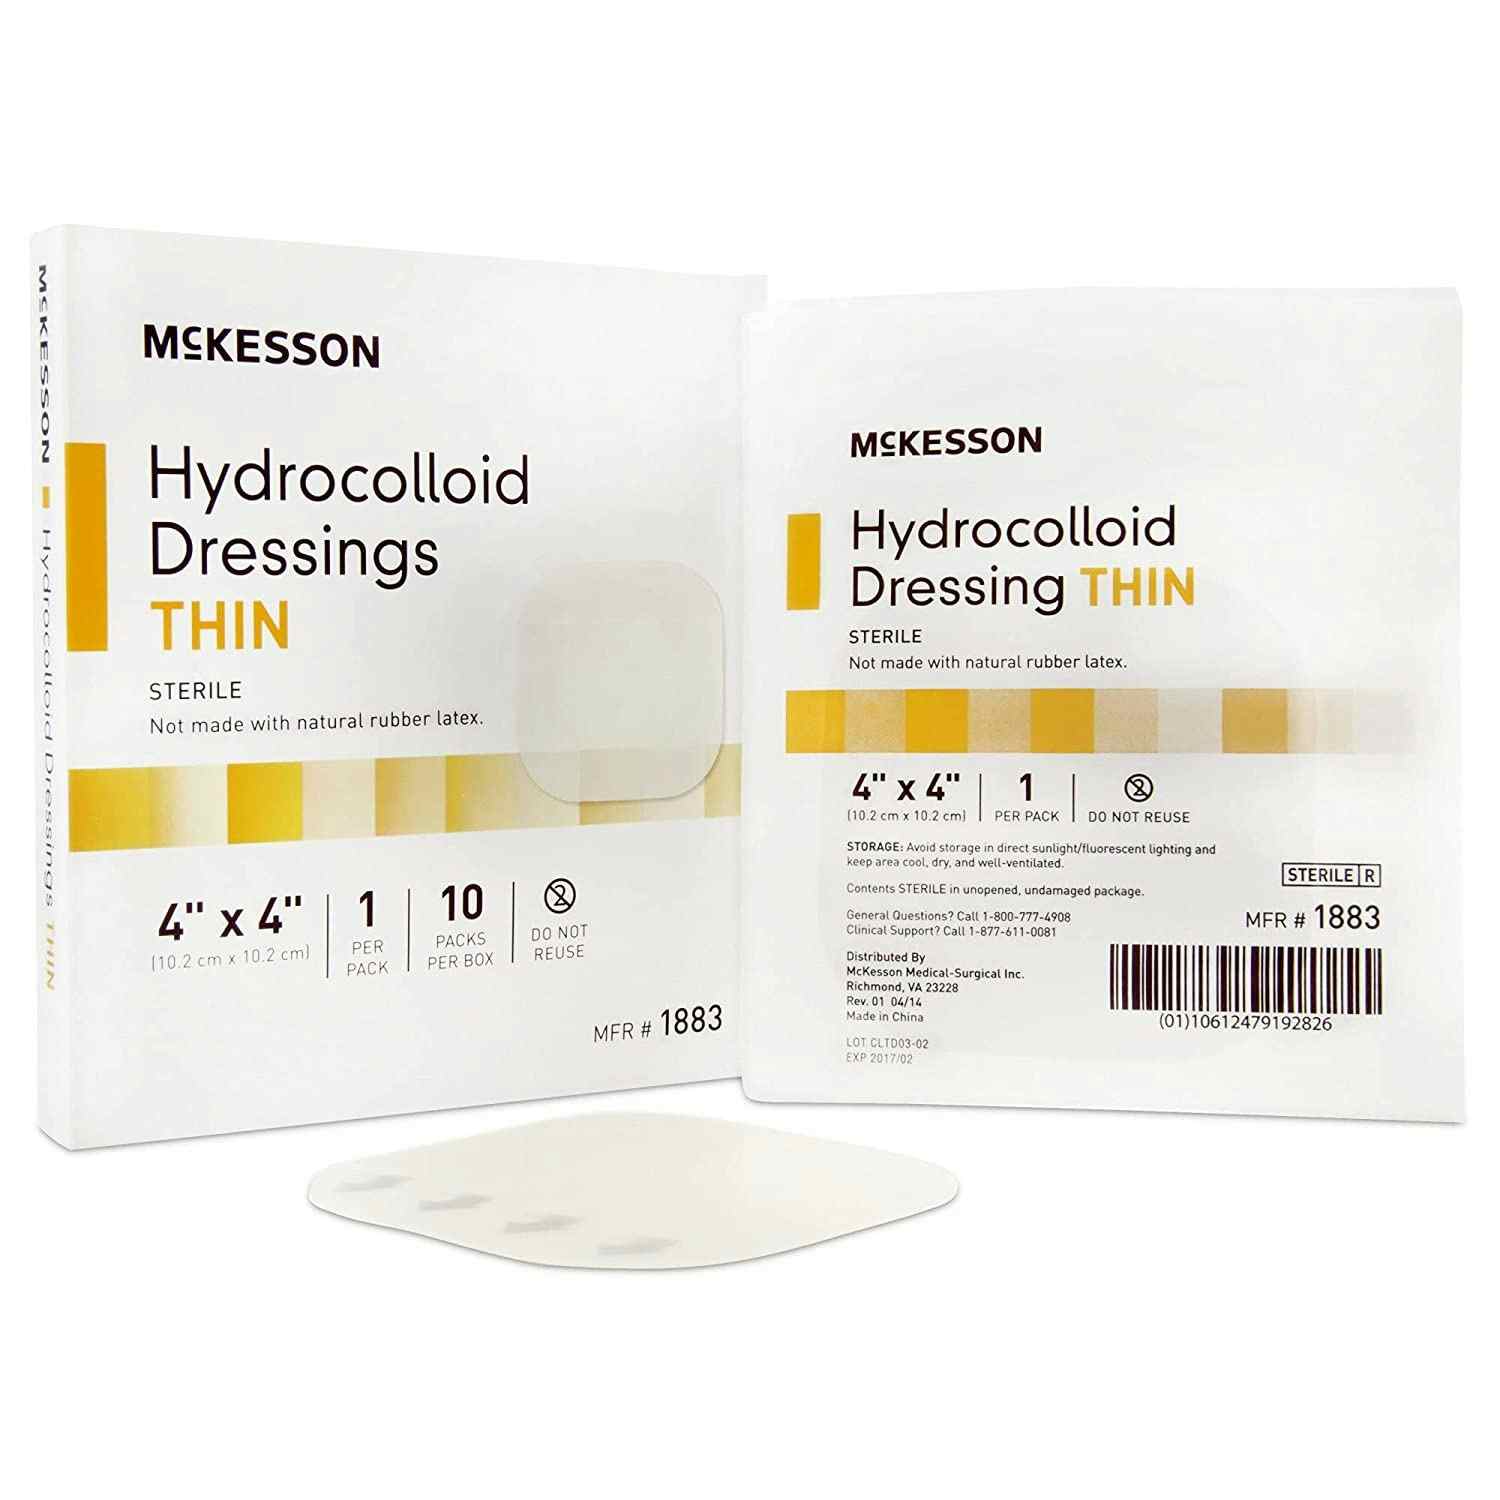 McKesson Hydrocolloid Dressing, Thin